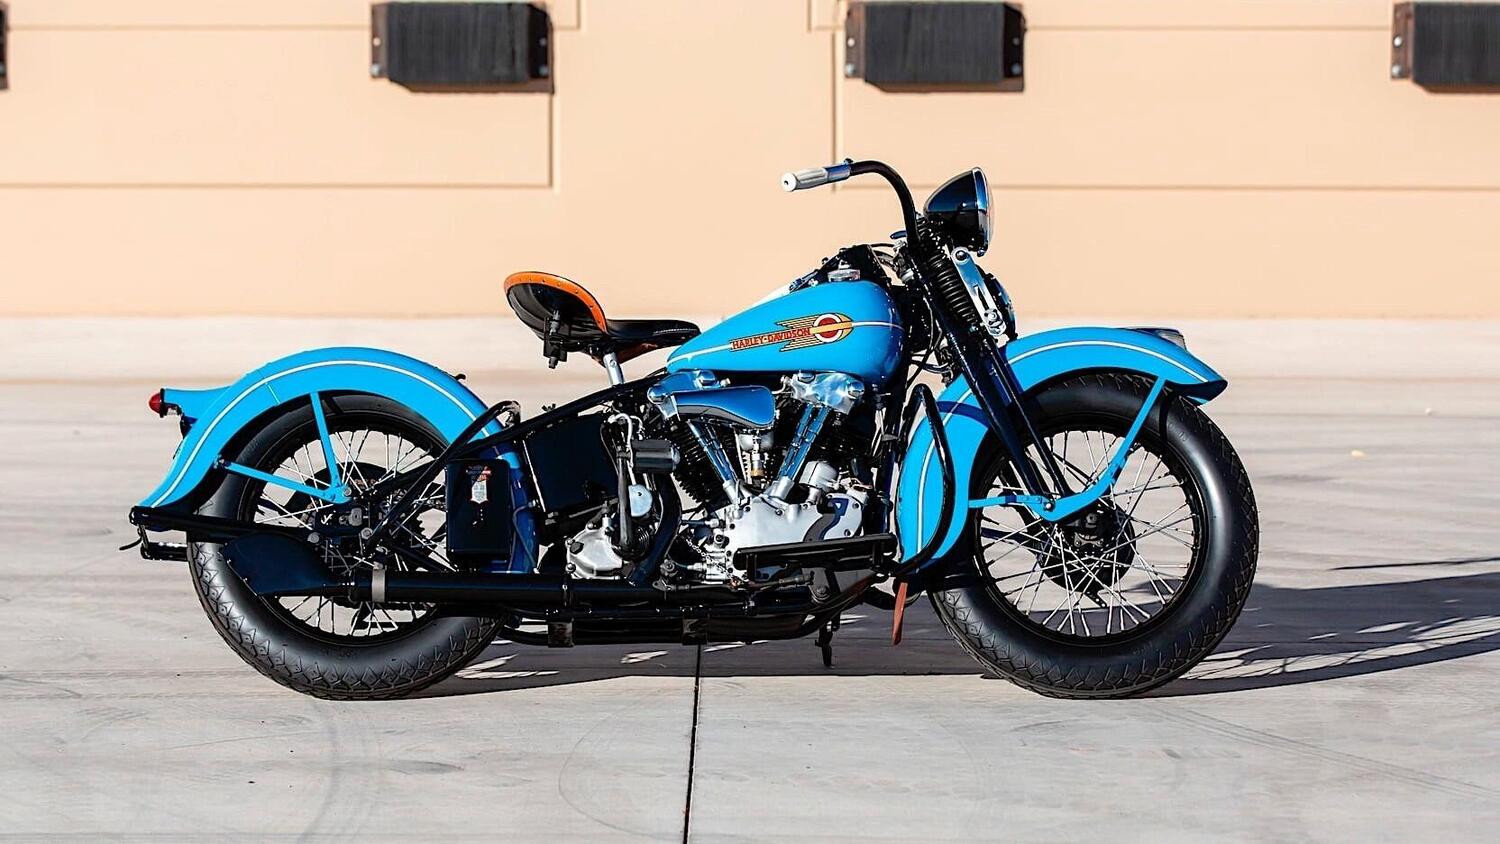 Harley-Davidson Knucklehead 38EL. Battuta all'asta per 154.000 dollari